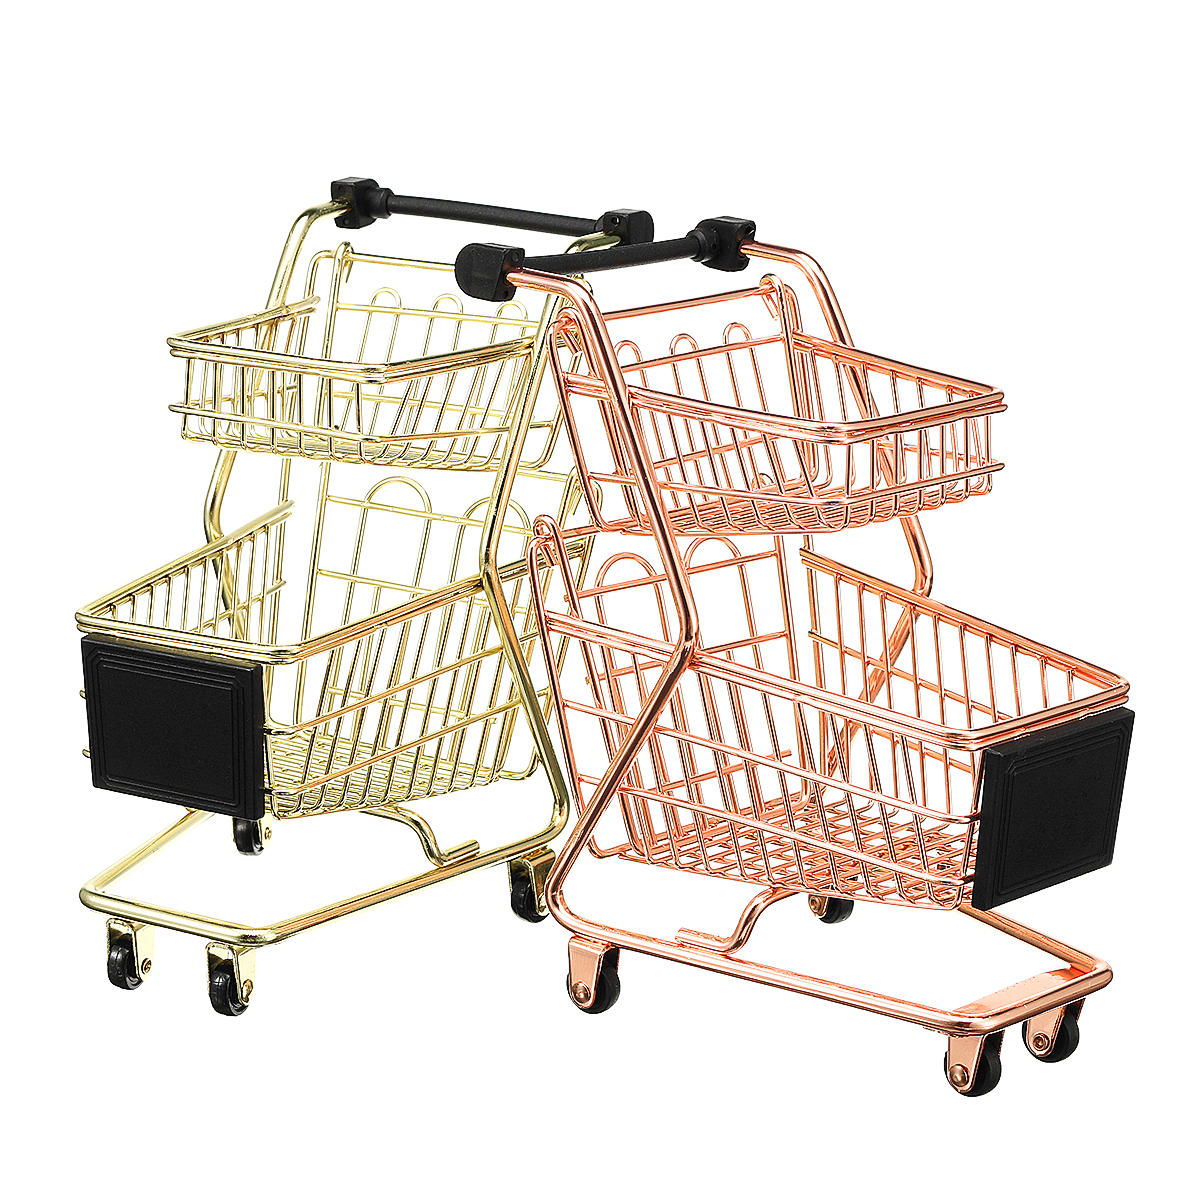 childrens metal shopping trolley